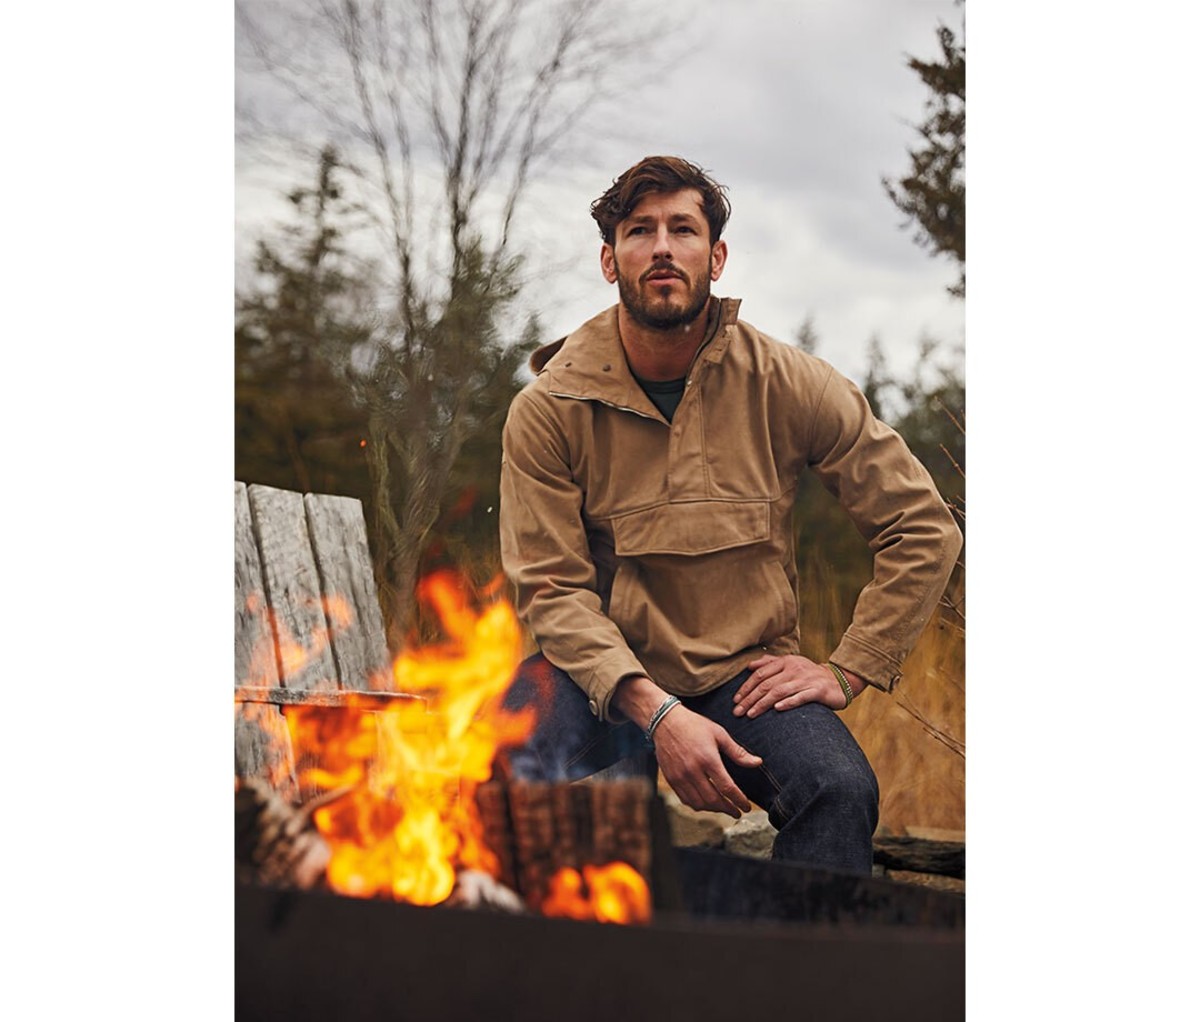 A man sitting next to a campfire